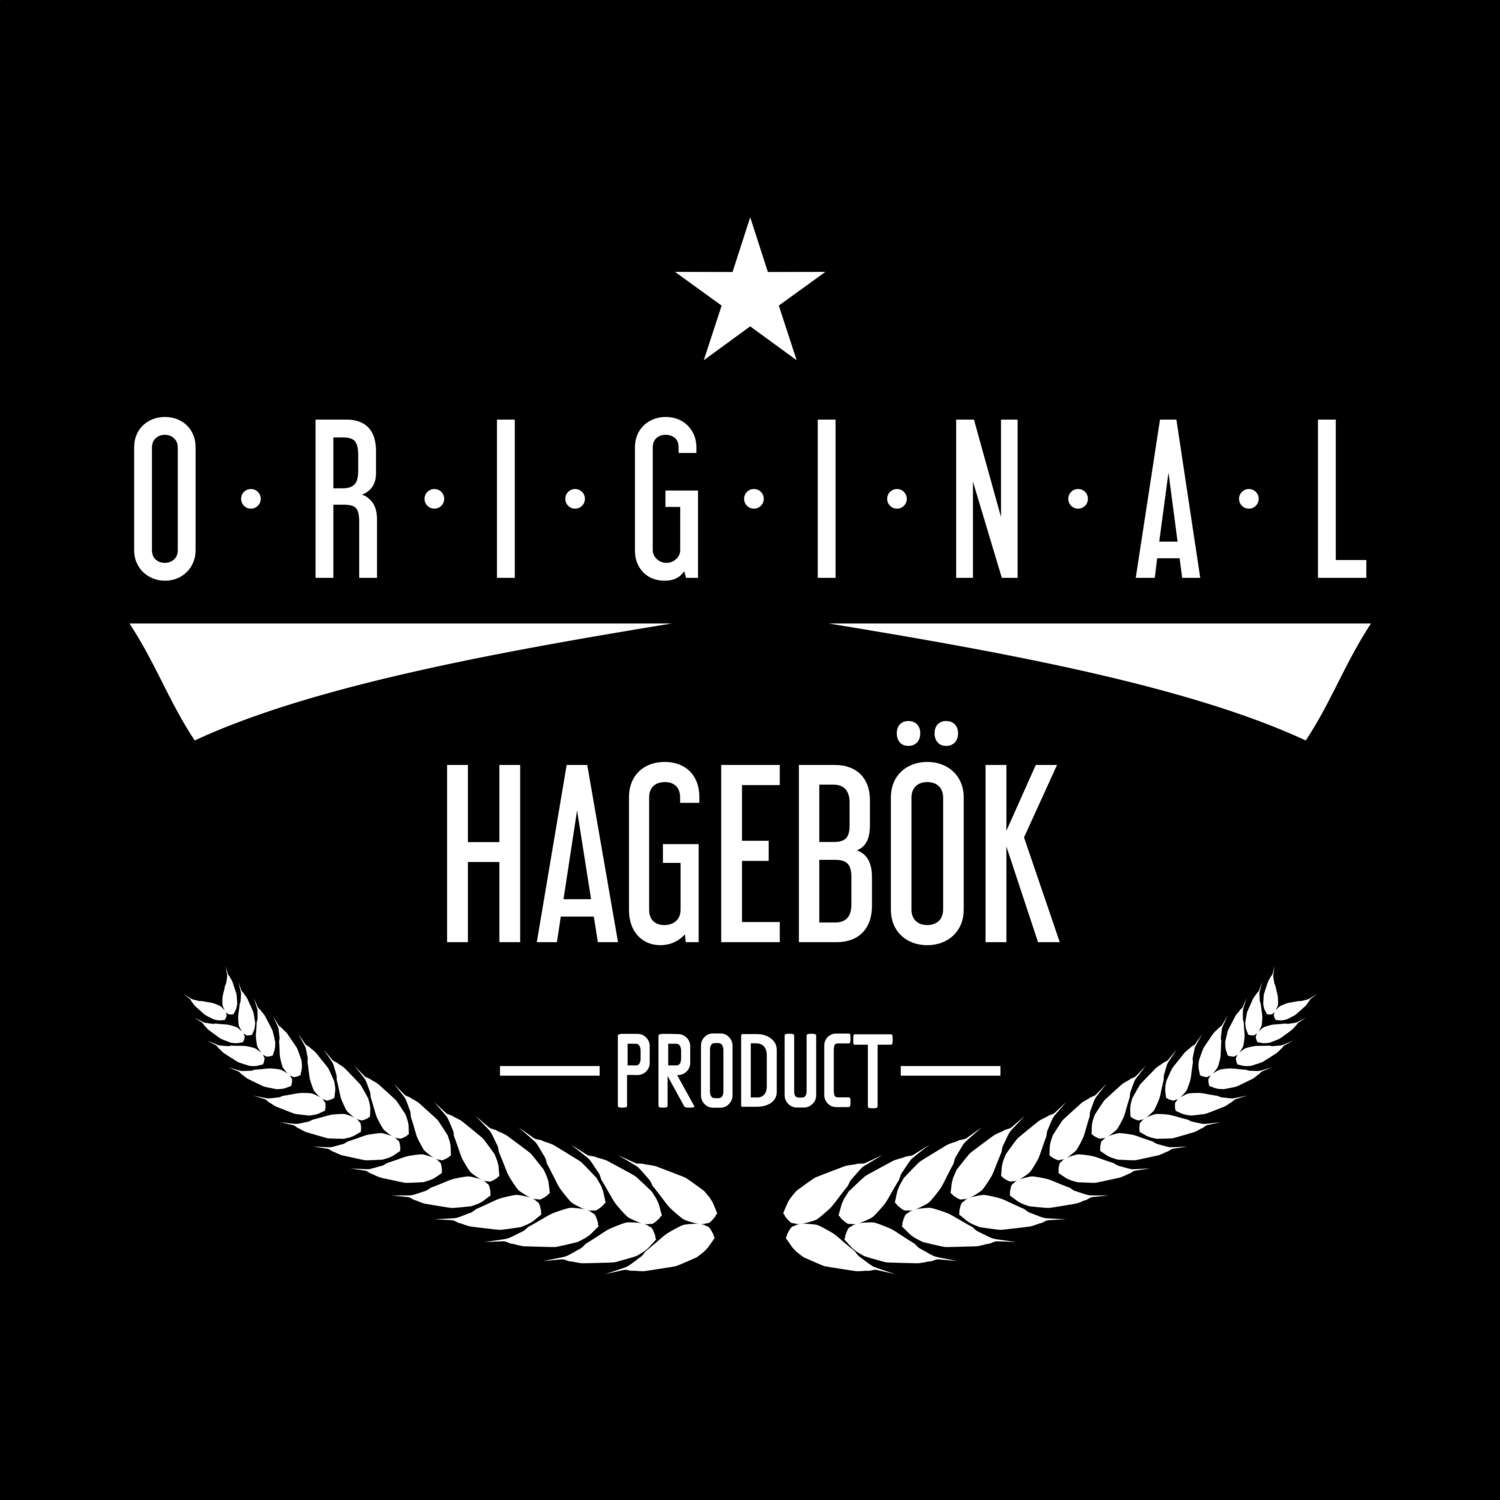 Hagebök T-Shirt »Original Product«